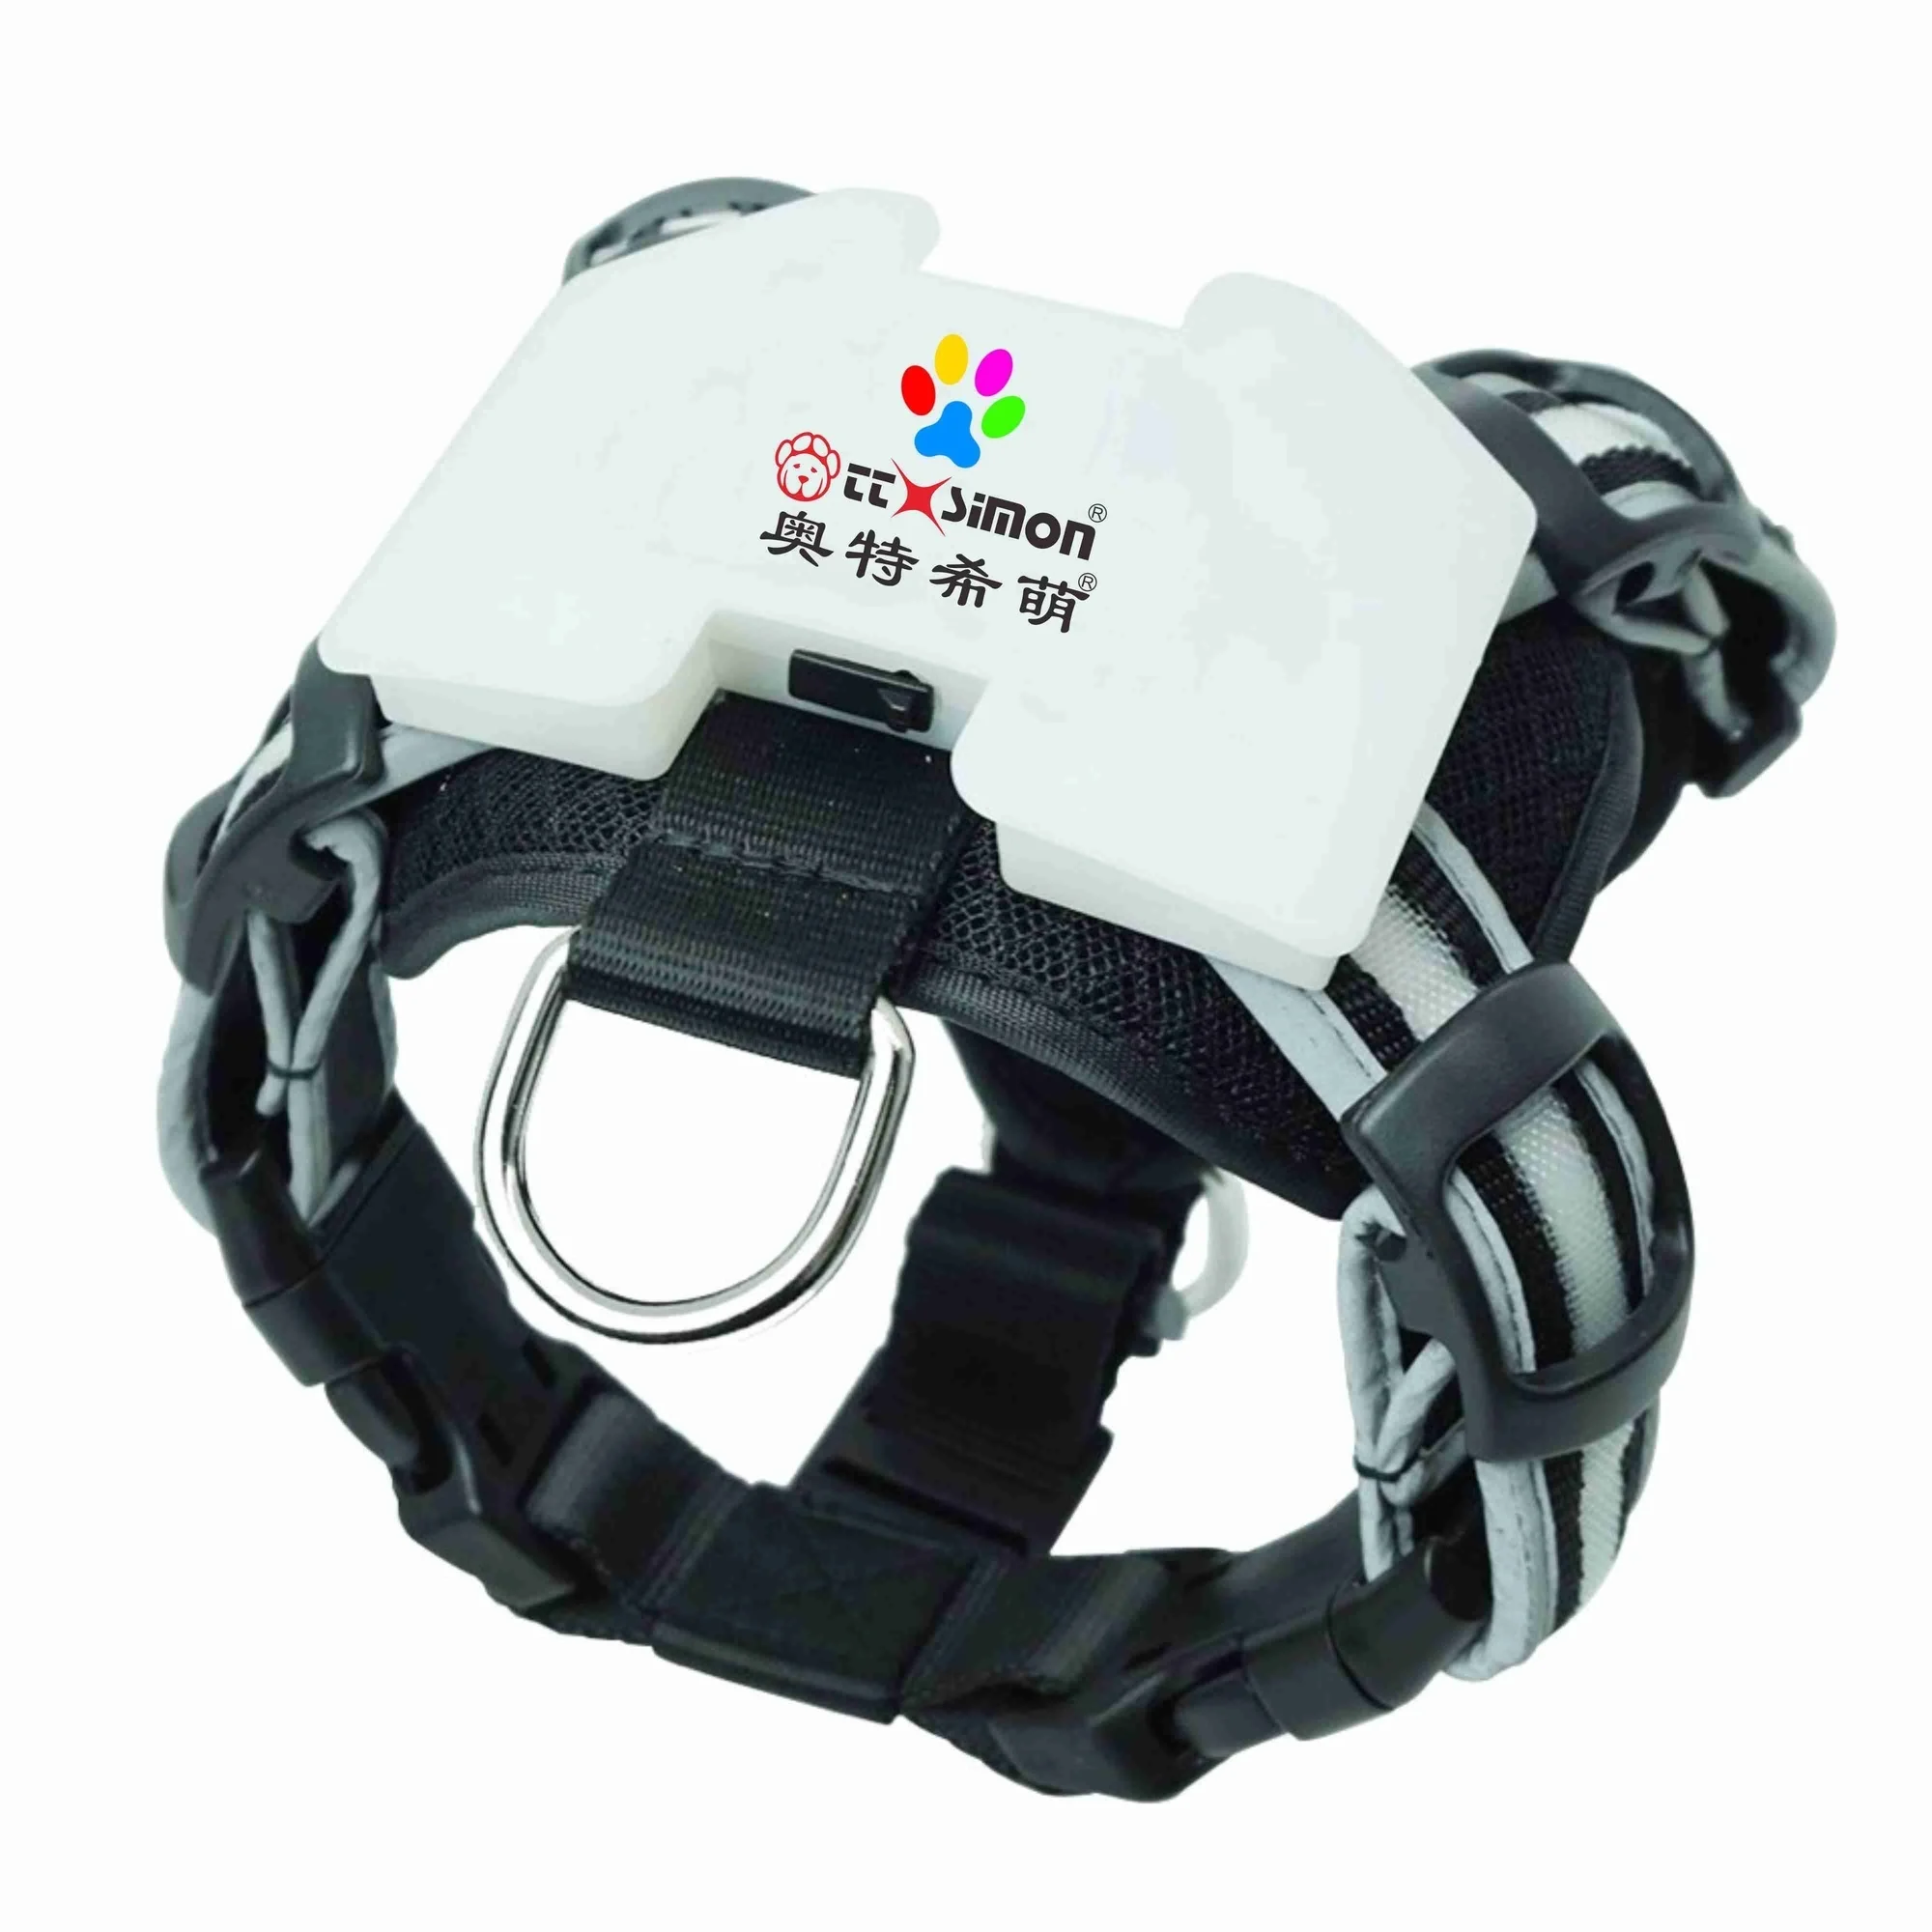 

dog cc simon harness led light service dog harness Factory LED flashing dog harness with high quality